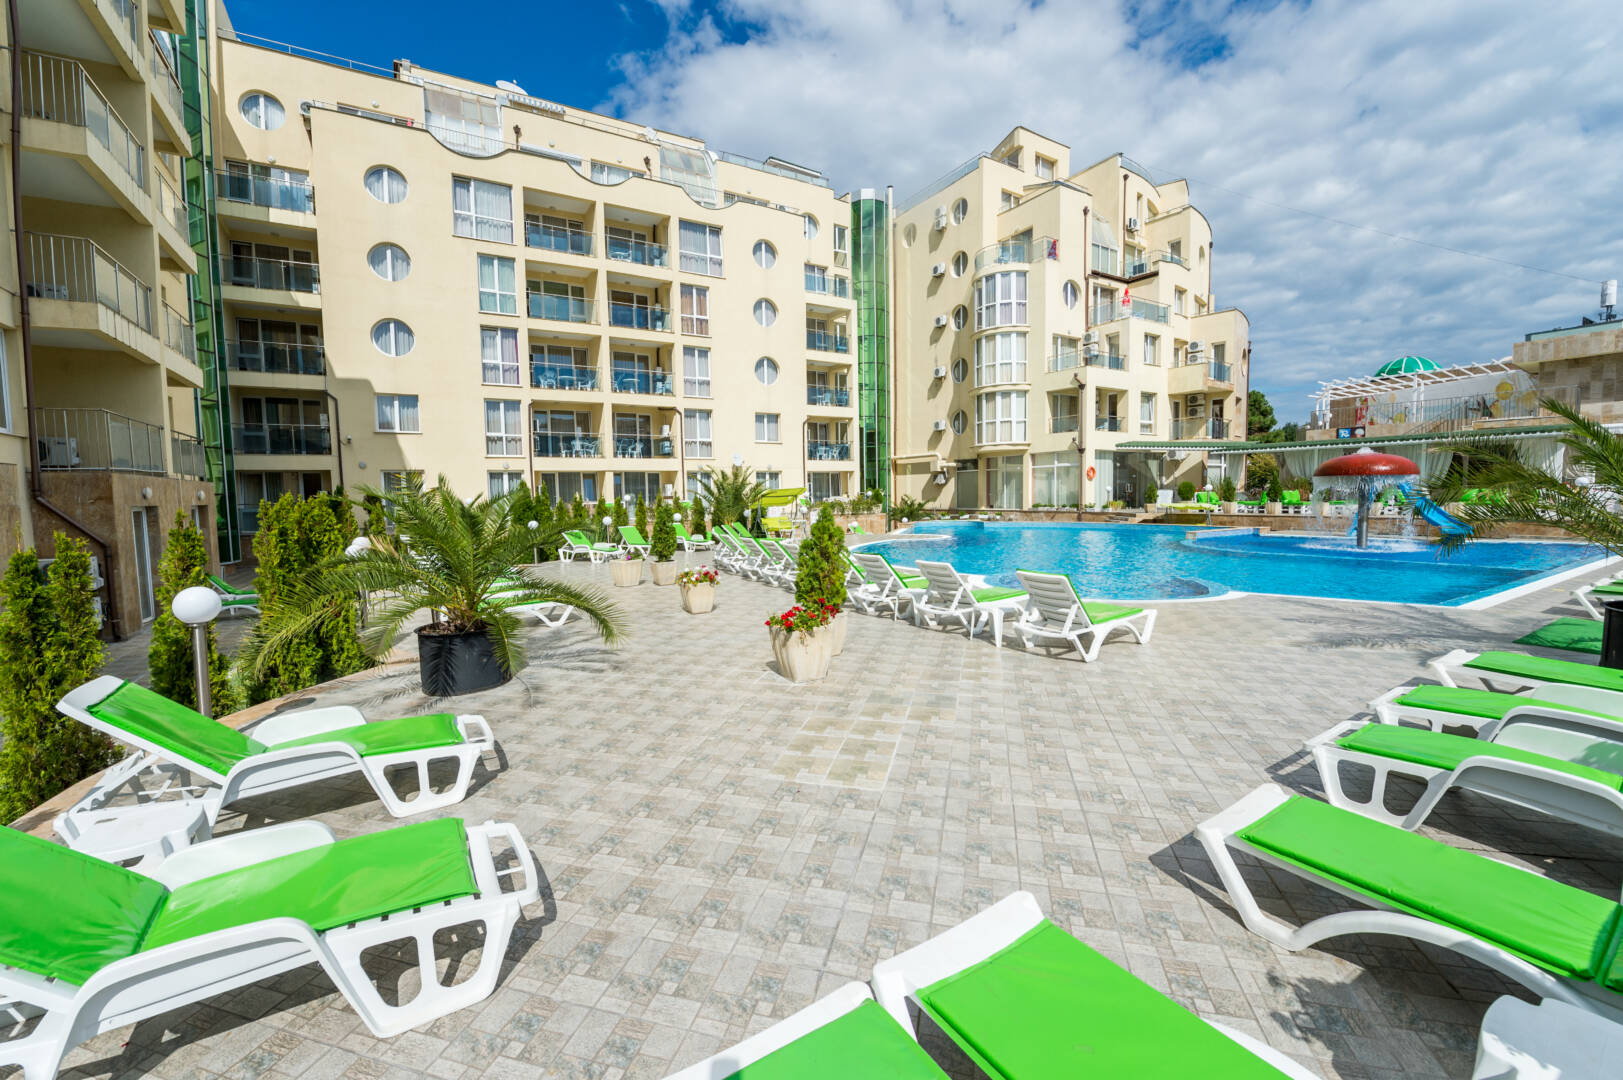 Eternal Hotel - R Resort - swimming pool